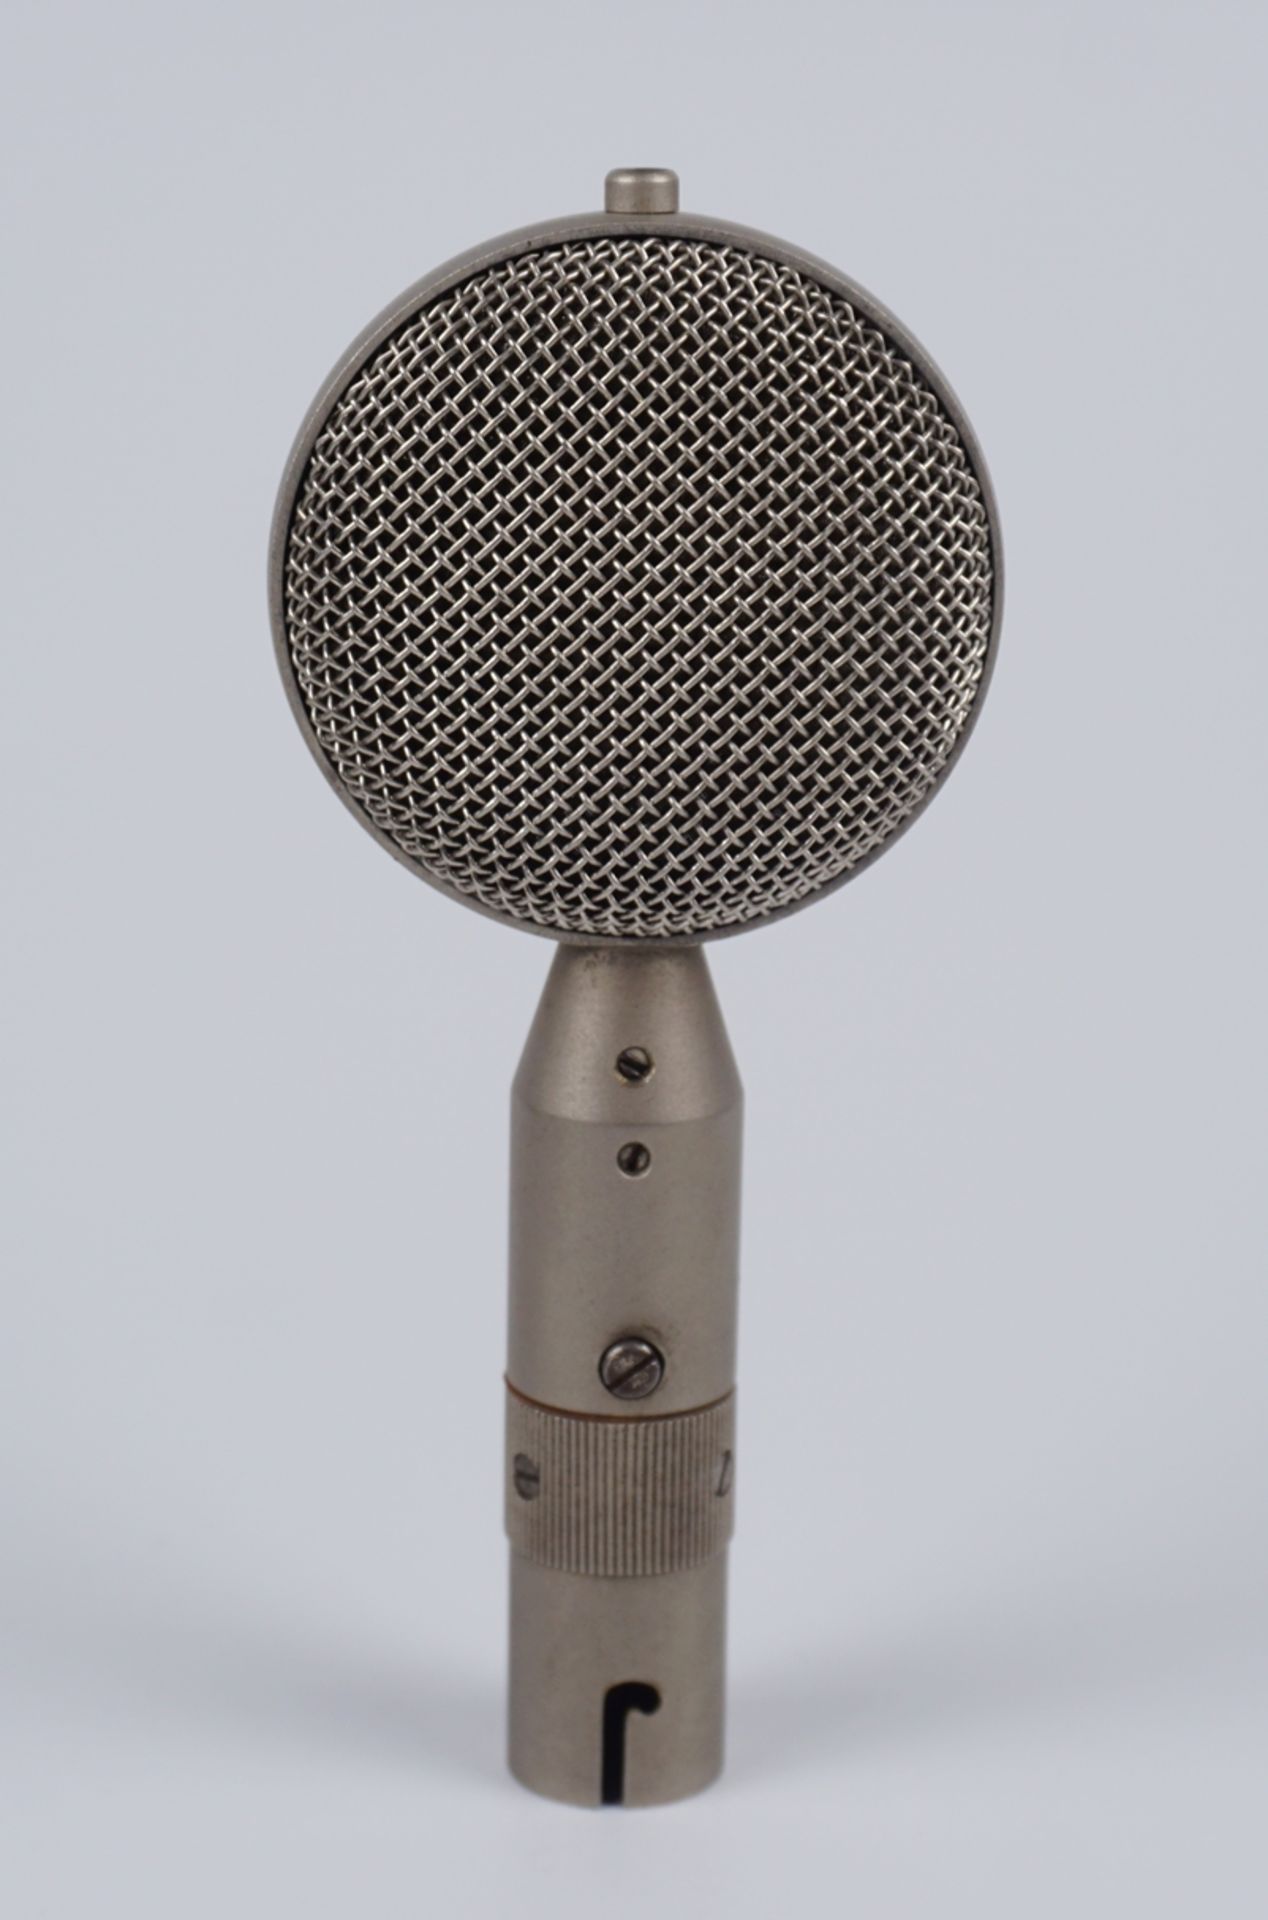 Kondensator-Mikrofonkapsel M 7, Georg Neumann&Co, Gefell/Vogland - Image 3 of 5